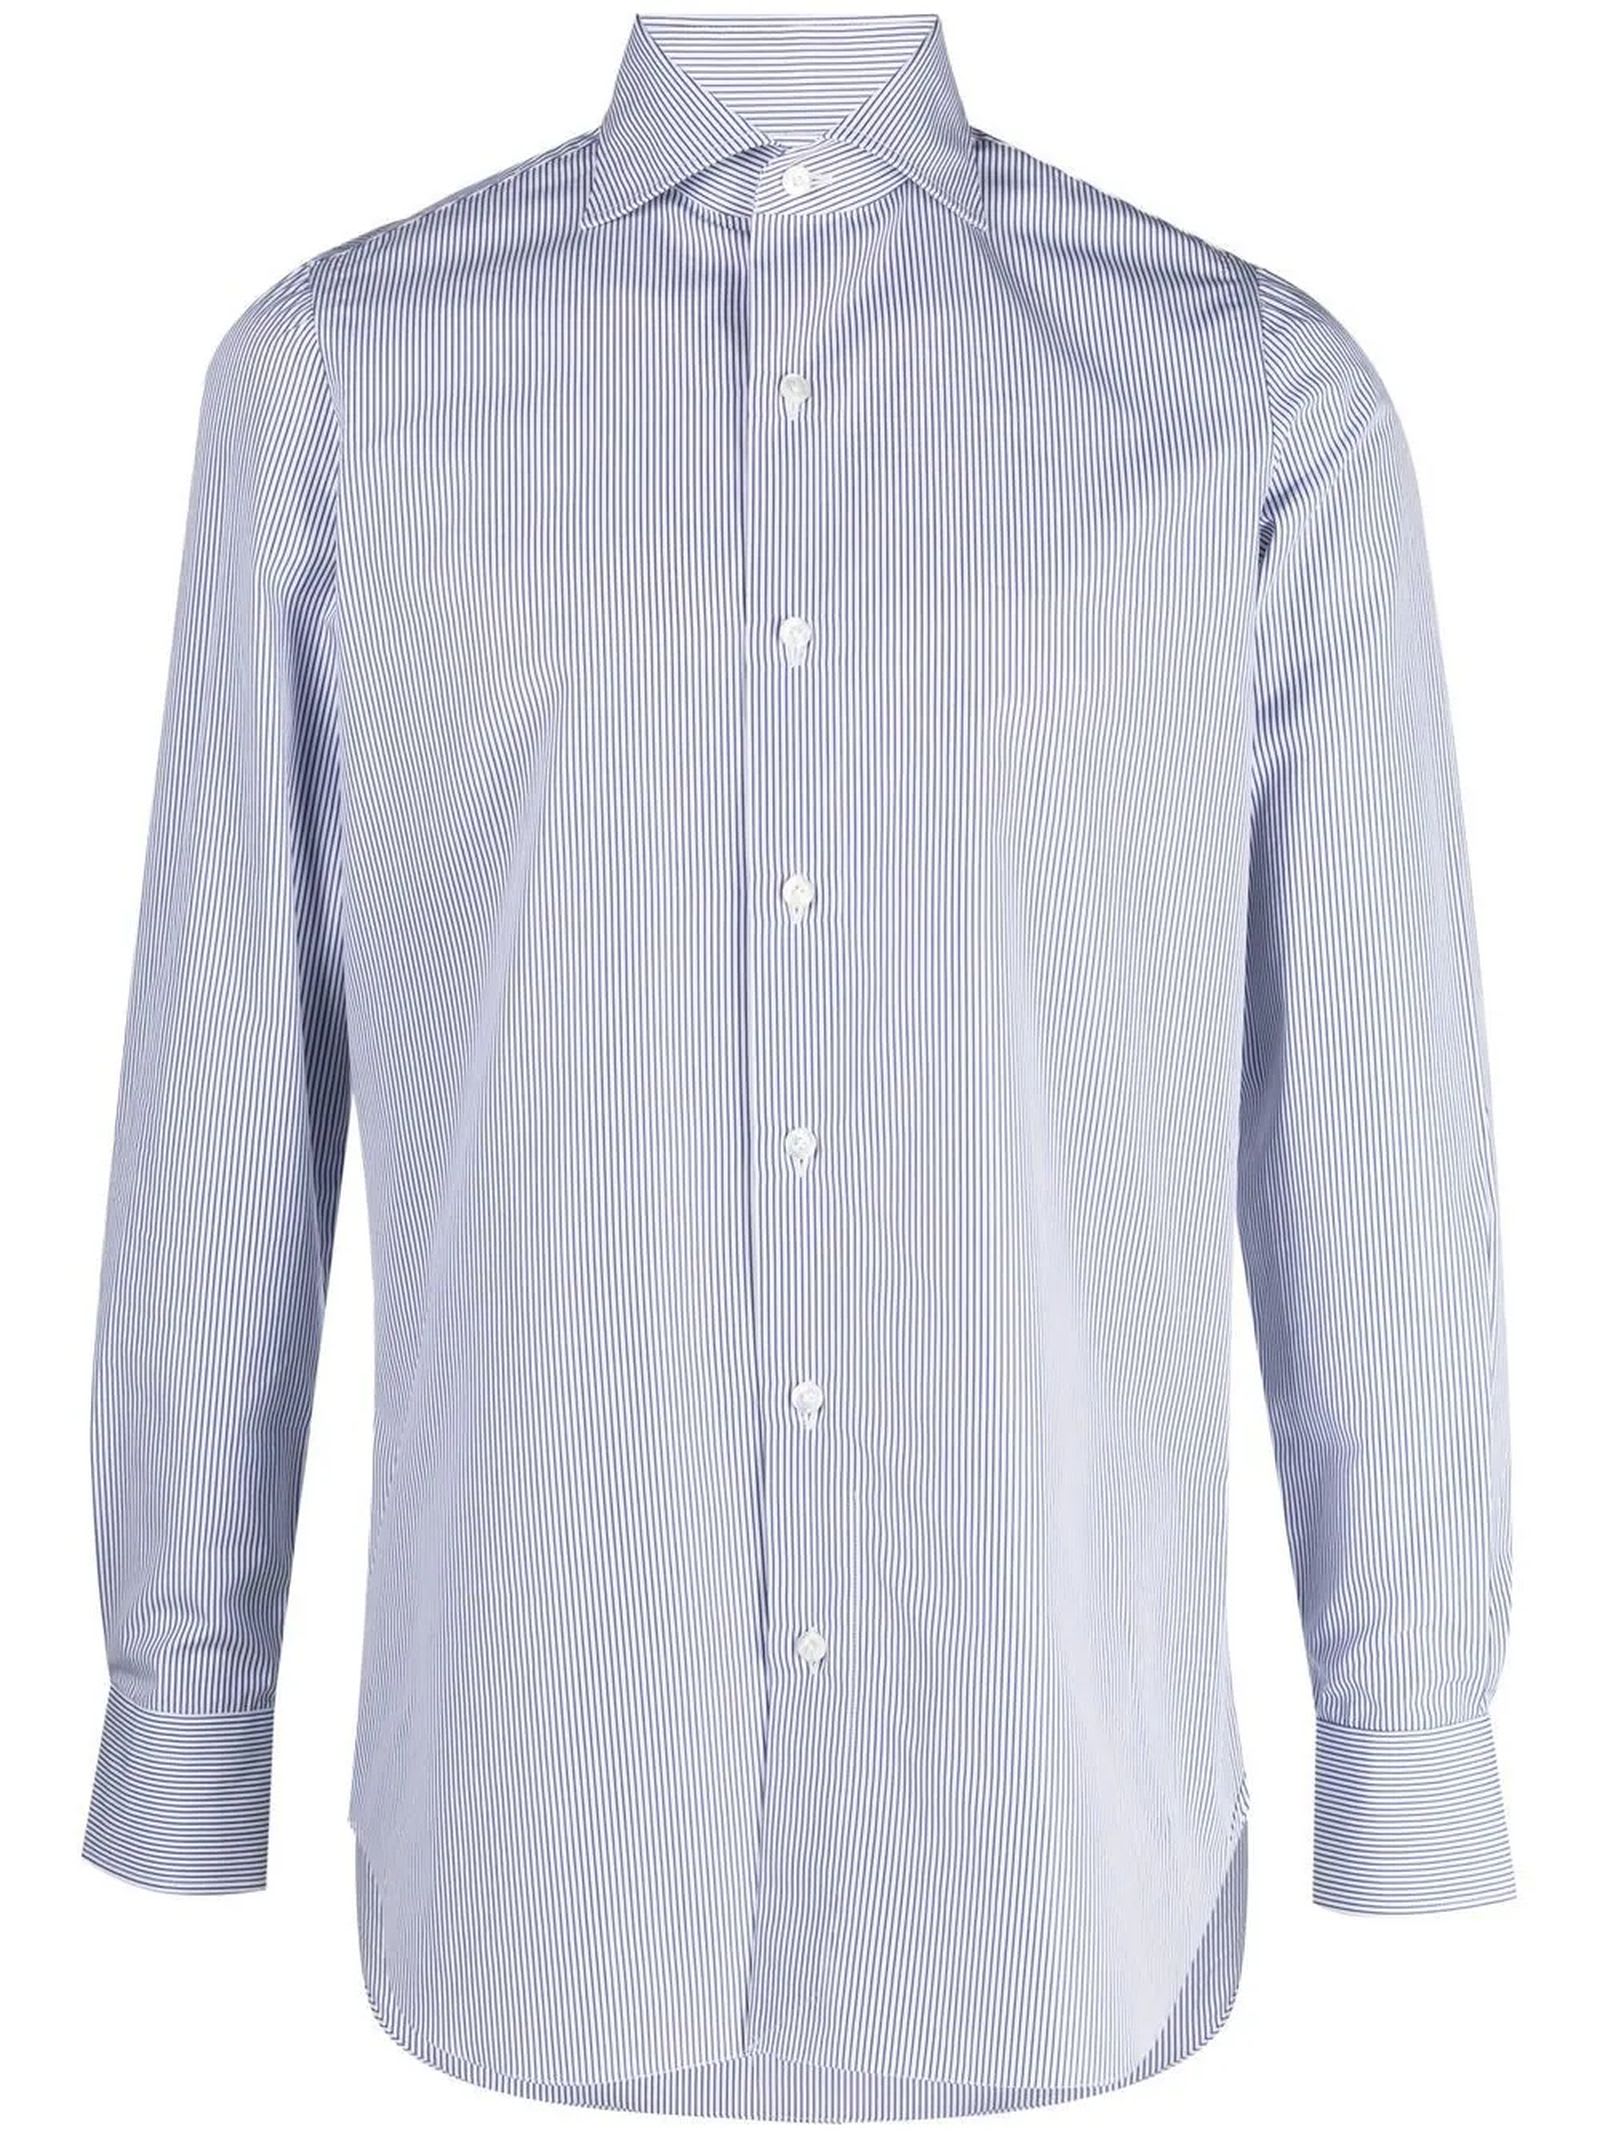 White And Light Blue Cotton Shirt